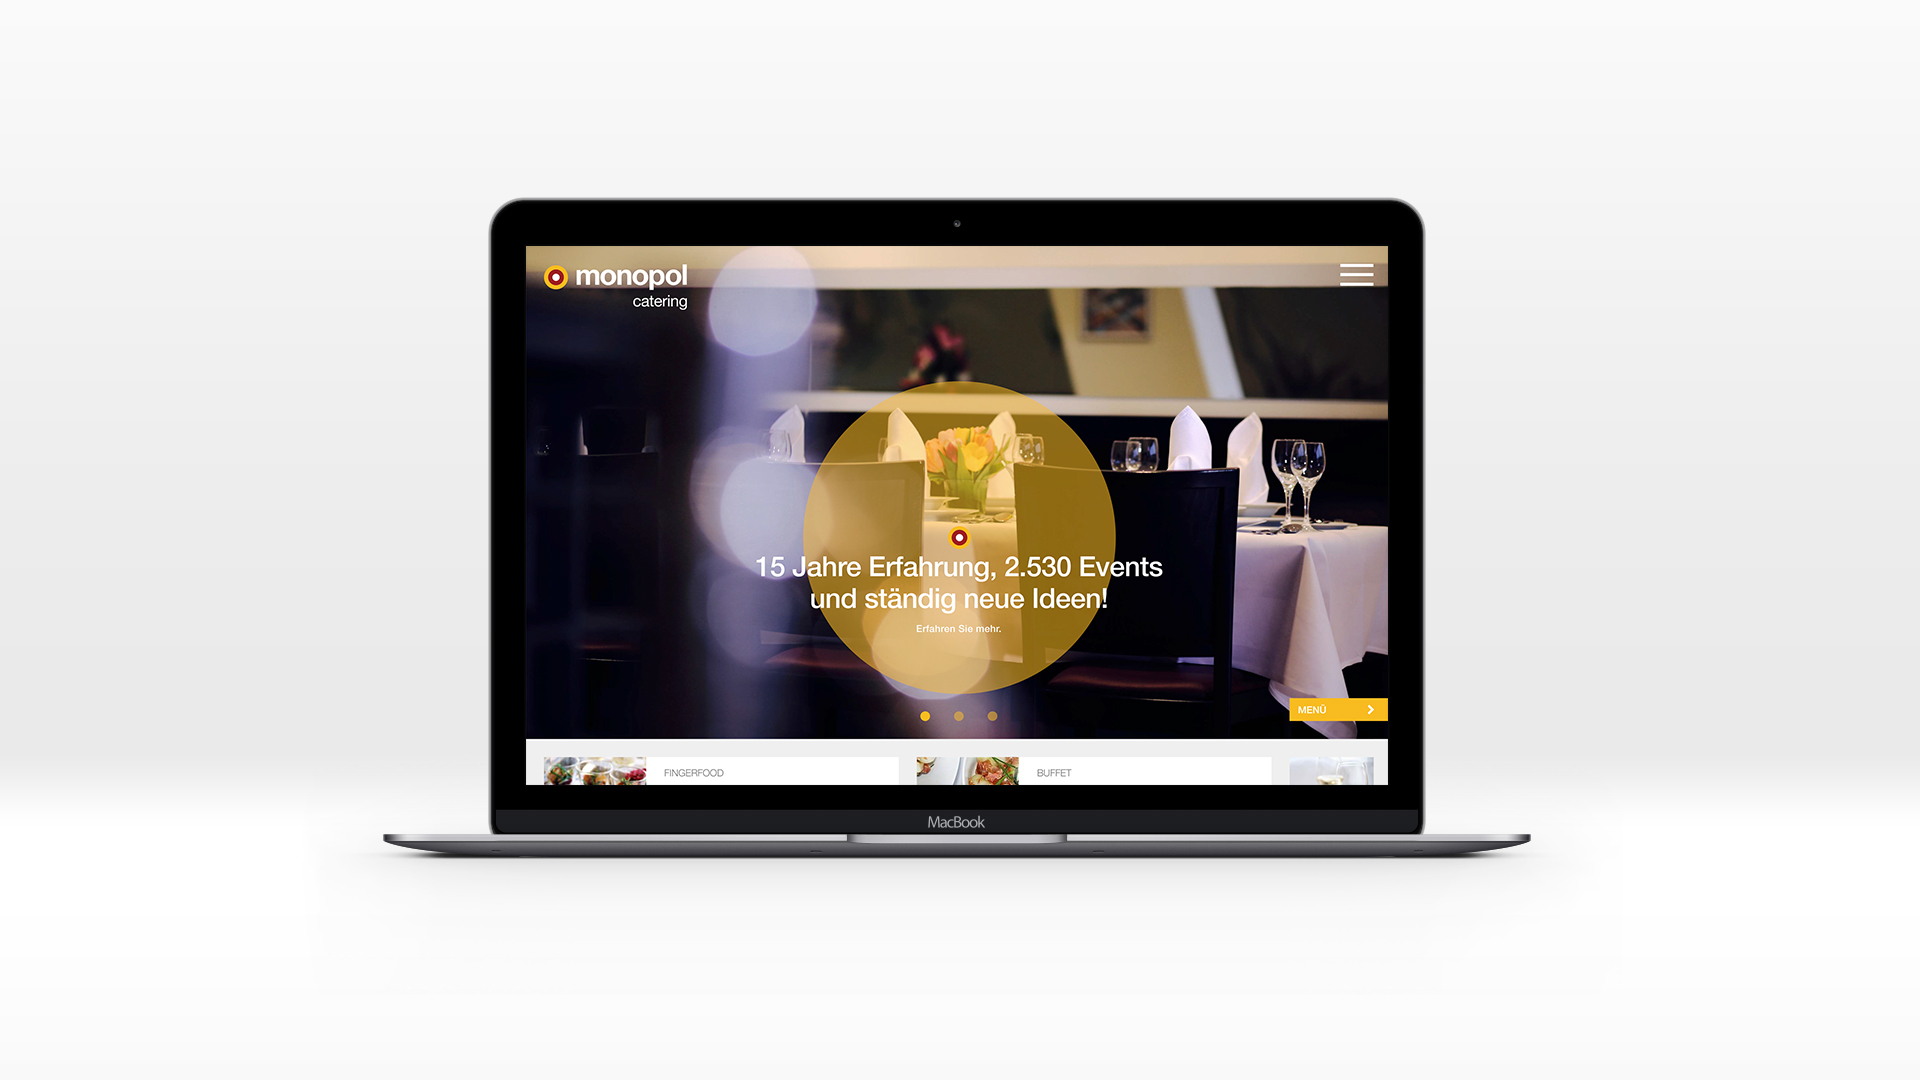 Monopol Catering Coporate Design und Website